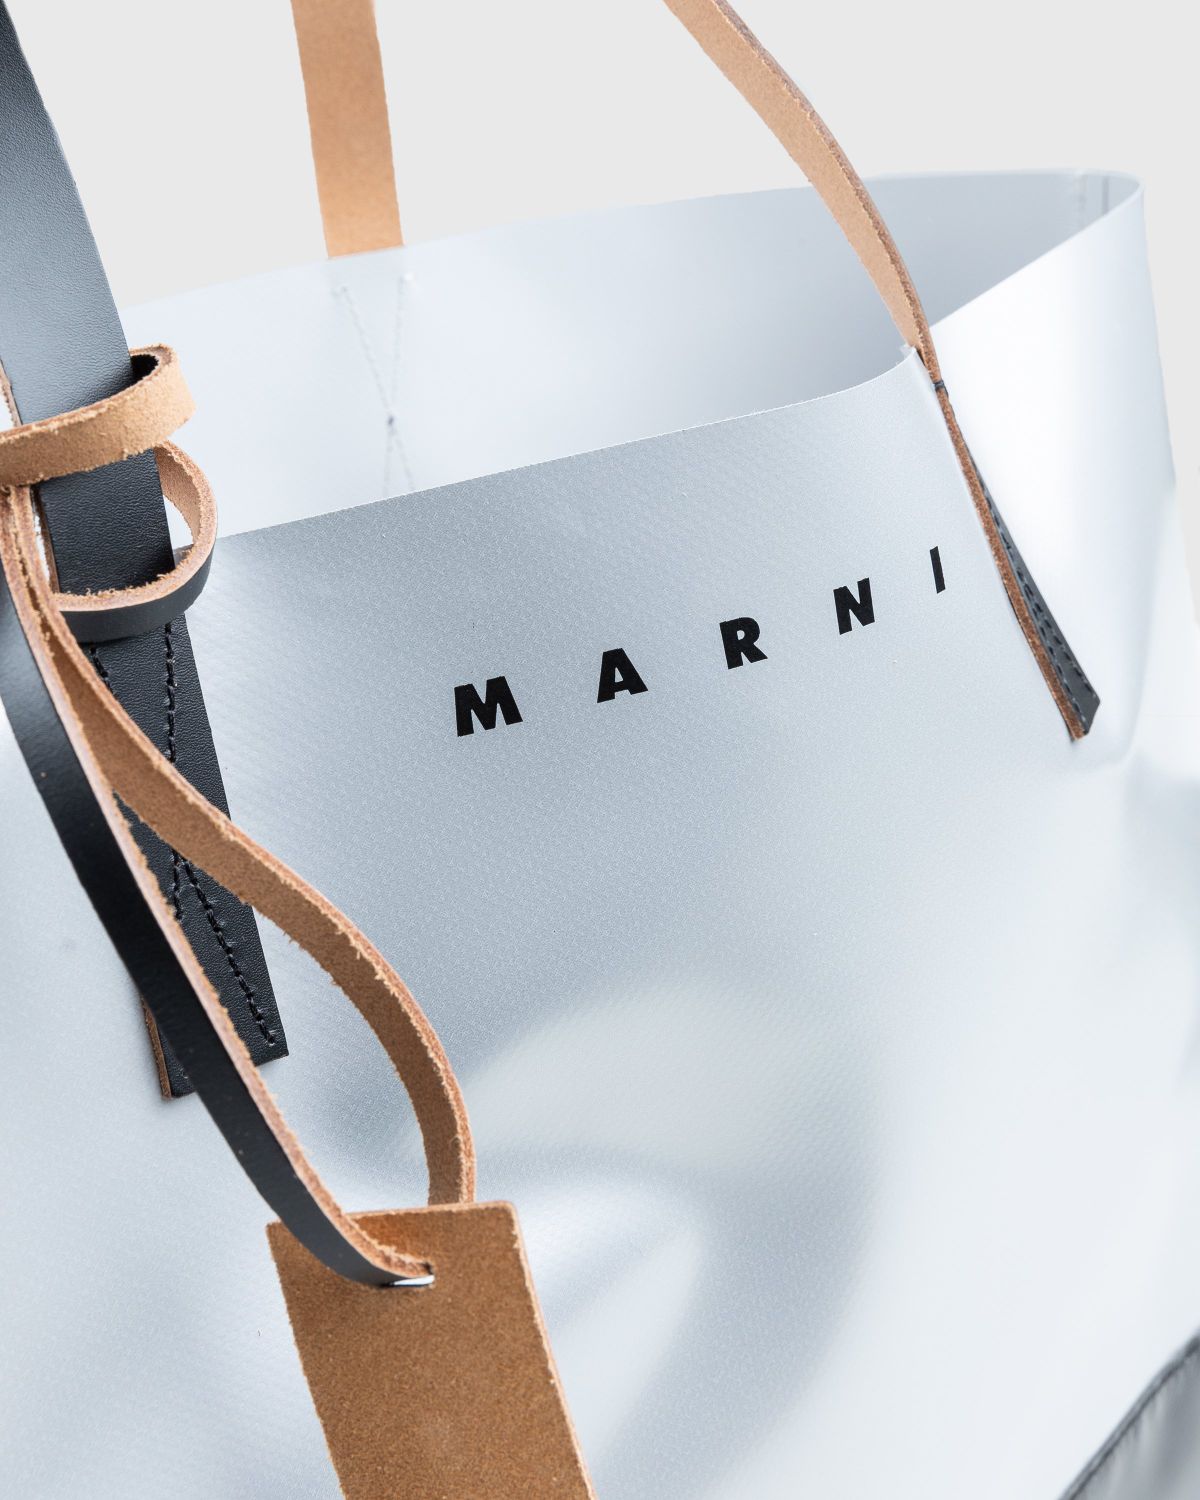 Marni – Tribeca Two-Tone Tote Bag Light Grey - Bags - Multi - Image 6